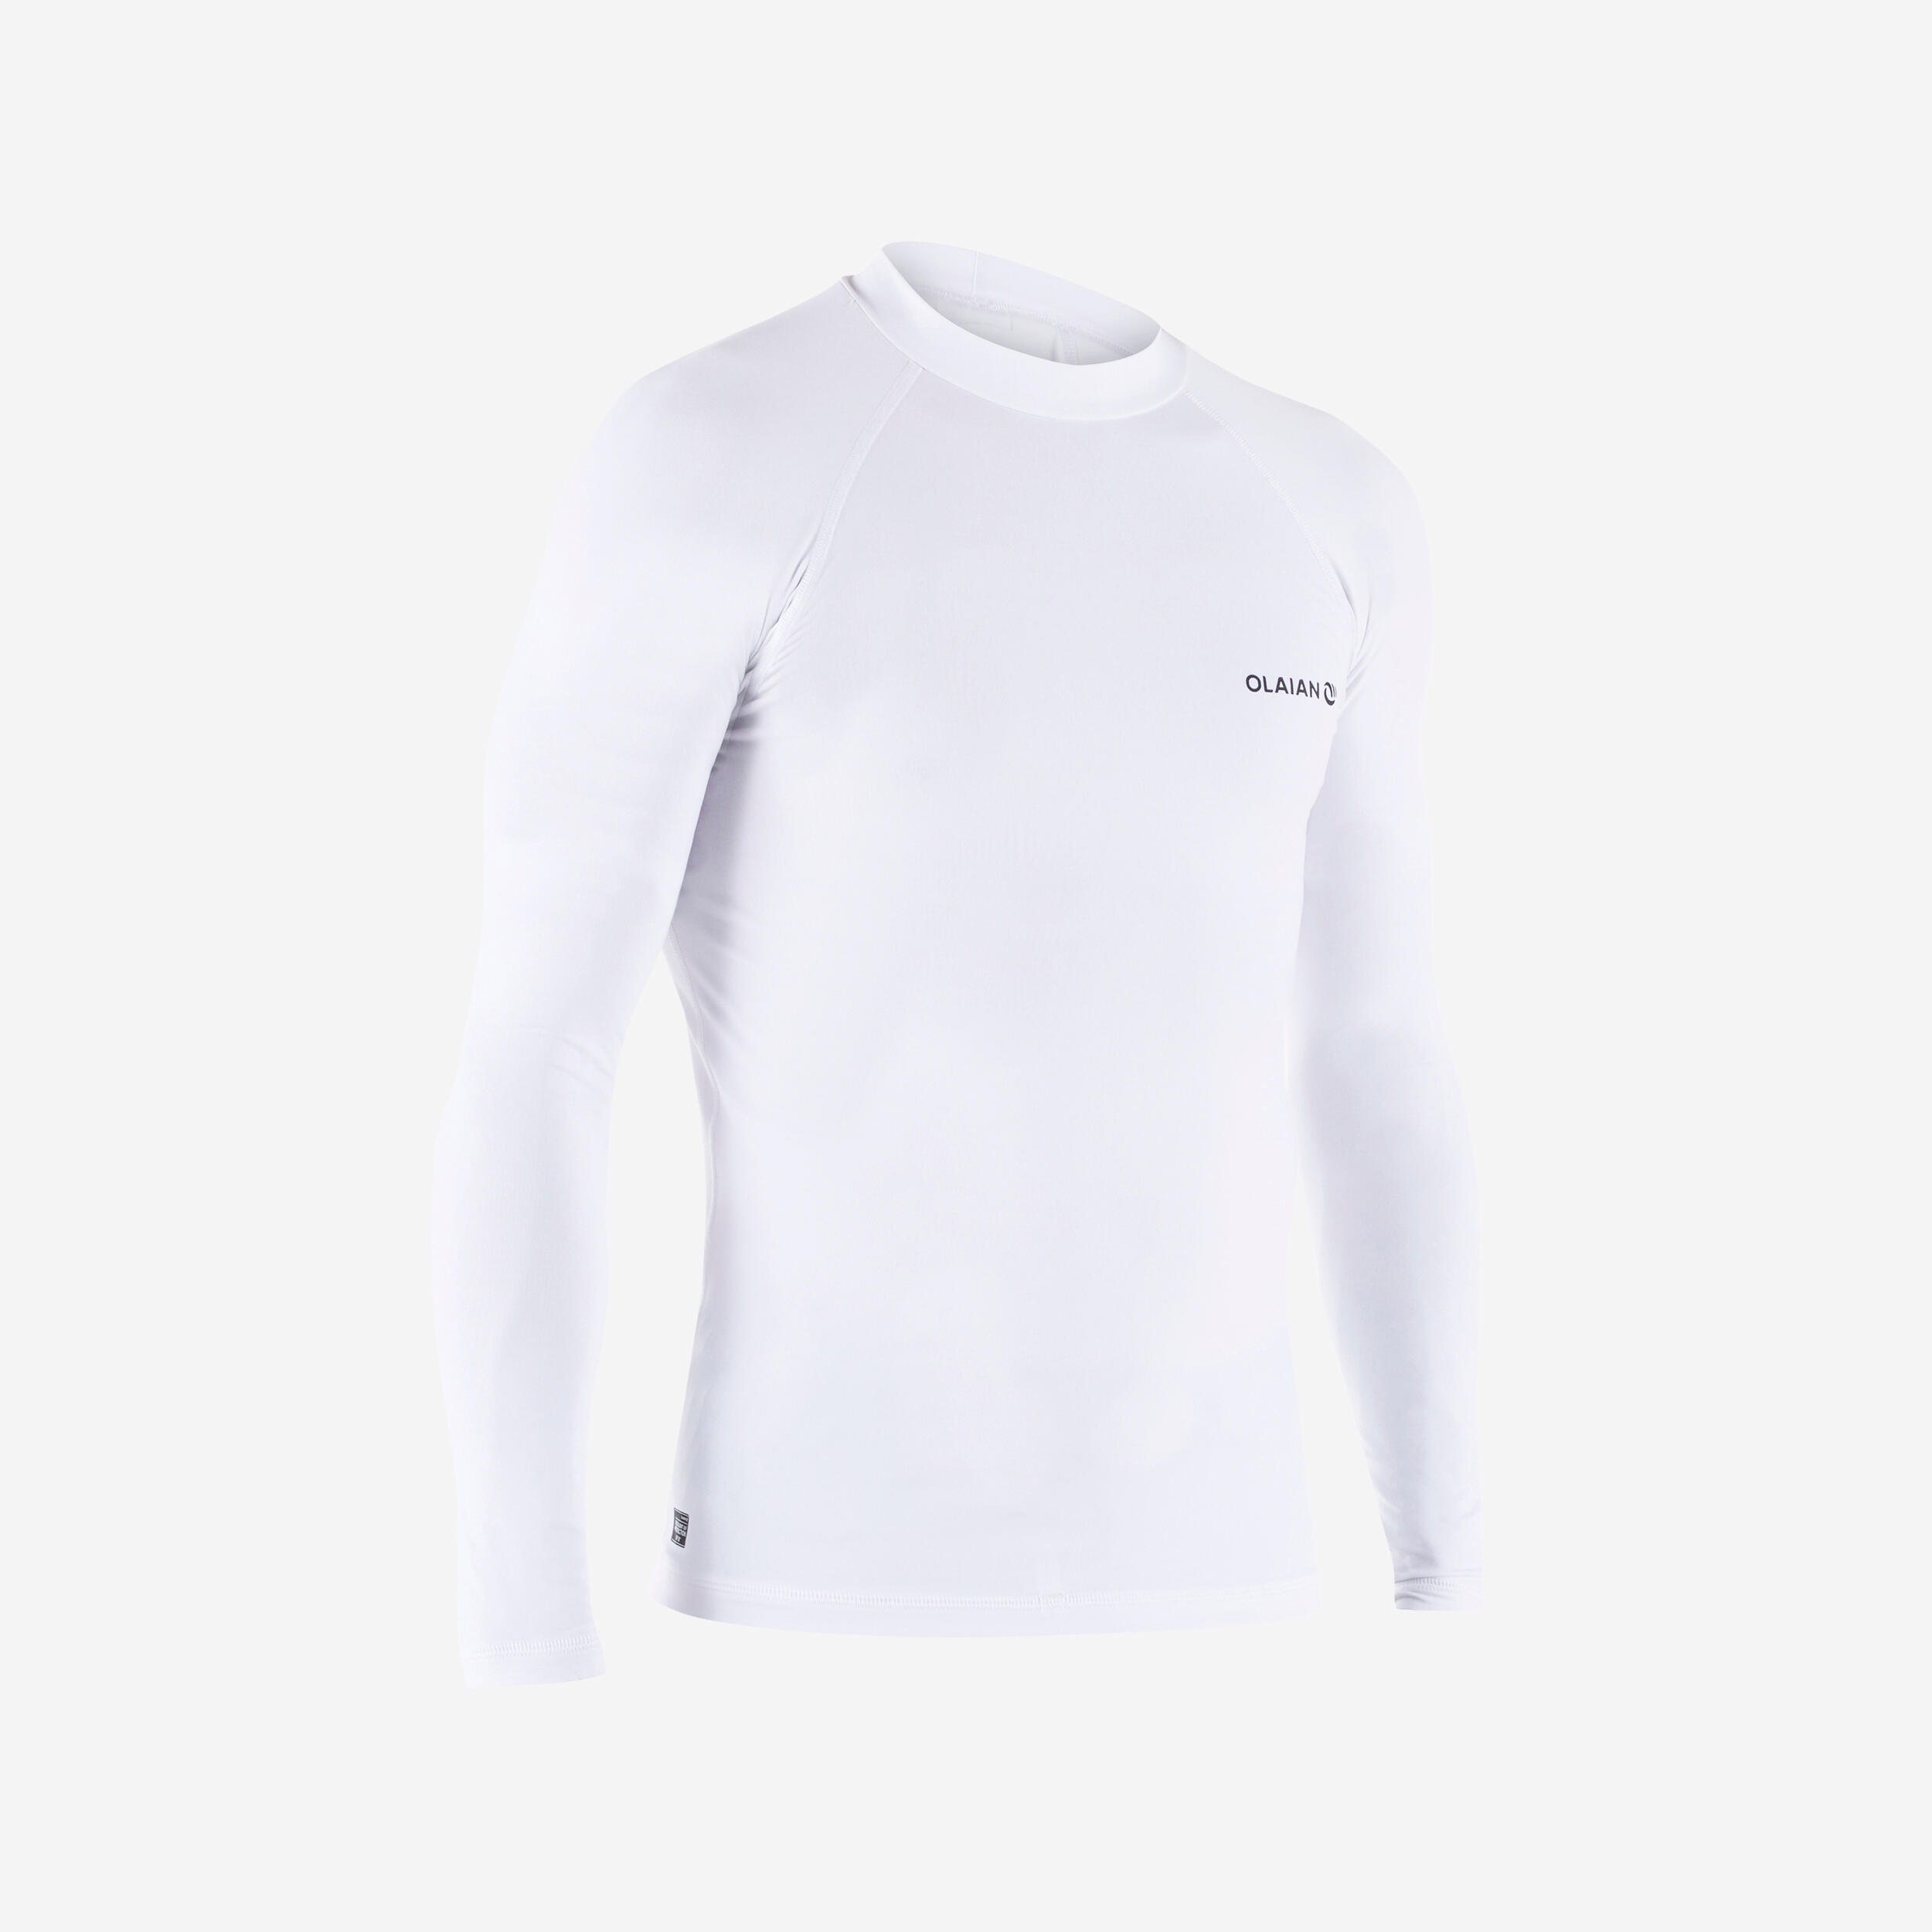 100 Men's Long Sleeve UV Protection Surfing Top T-Shirt - White 2/6